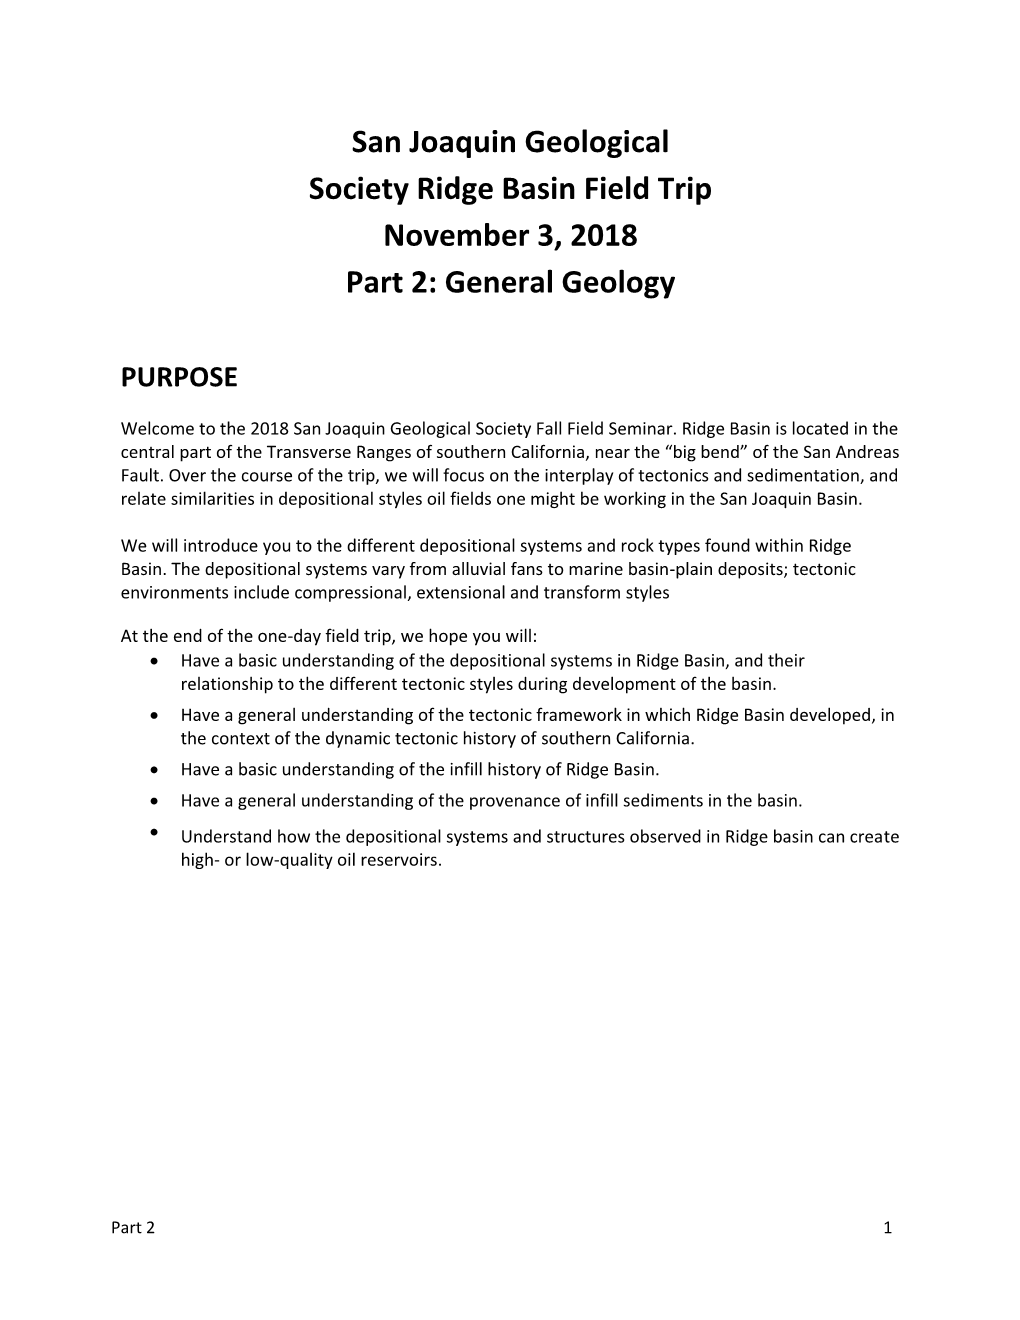 San Joaquin Geological Society Ridge Basin Field Trip November 3, 2018 Part 2: General Geology